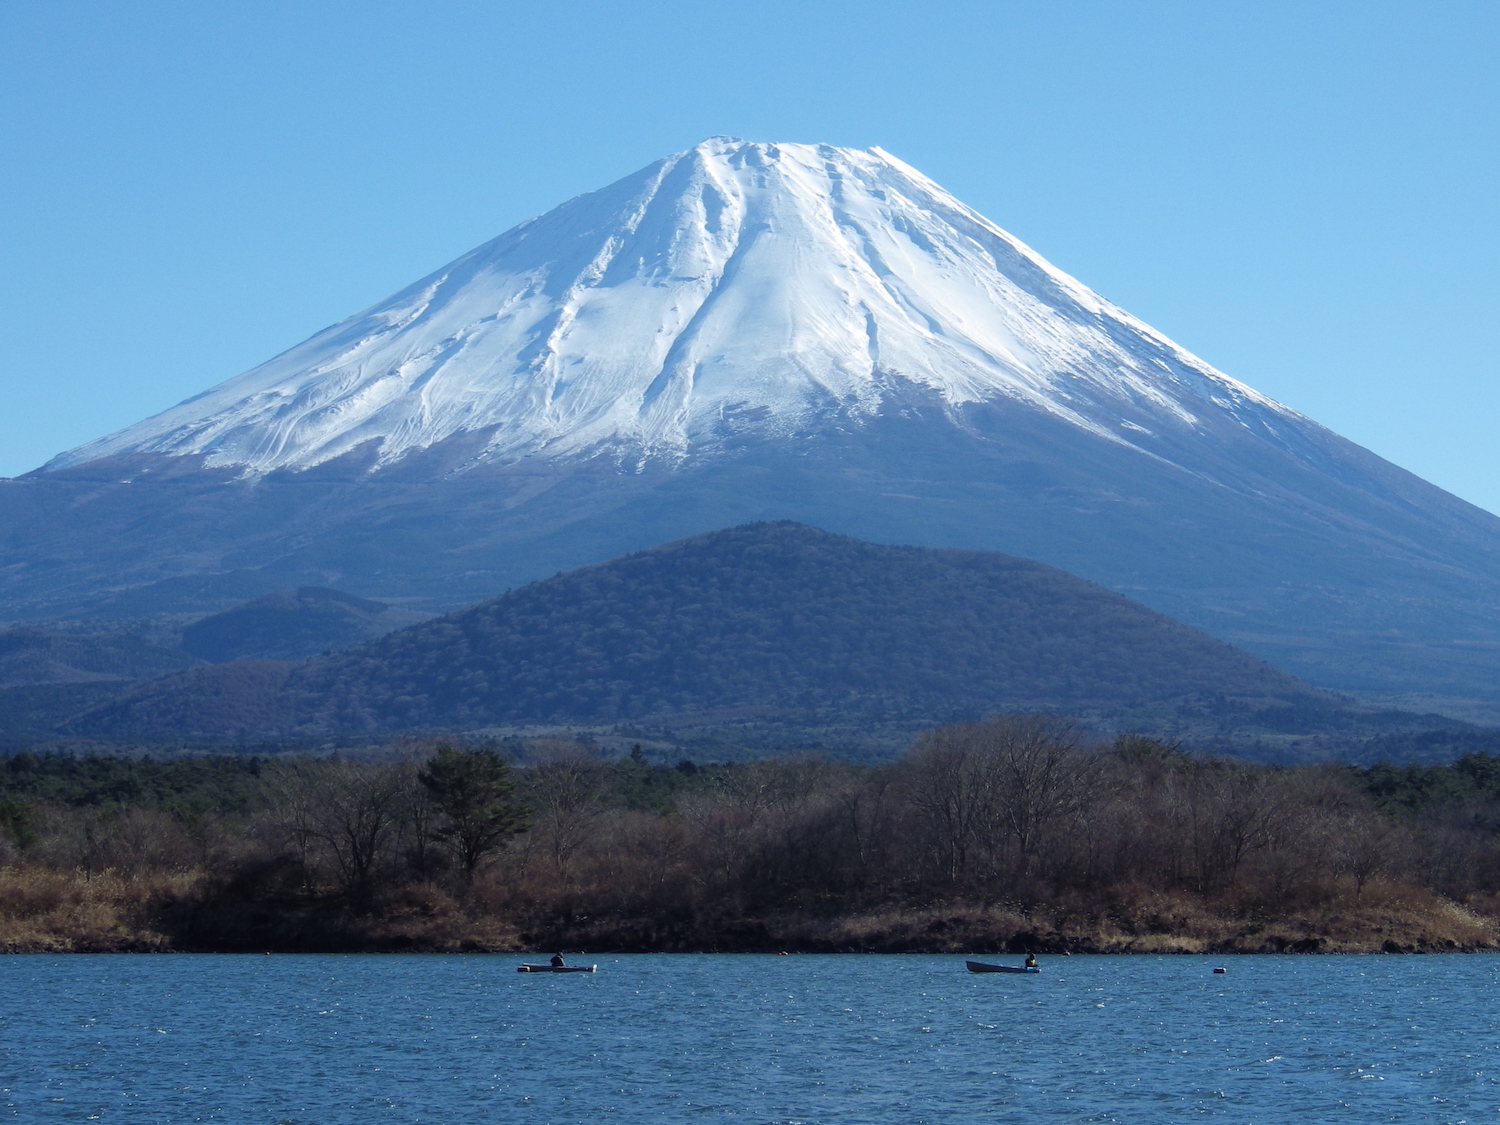 Hoto Noodles - Fuji Five Lakes Travel